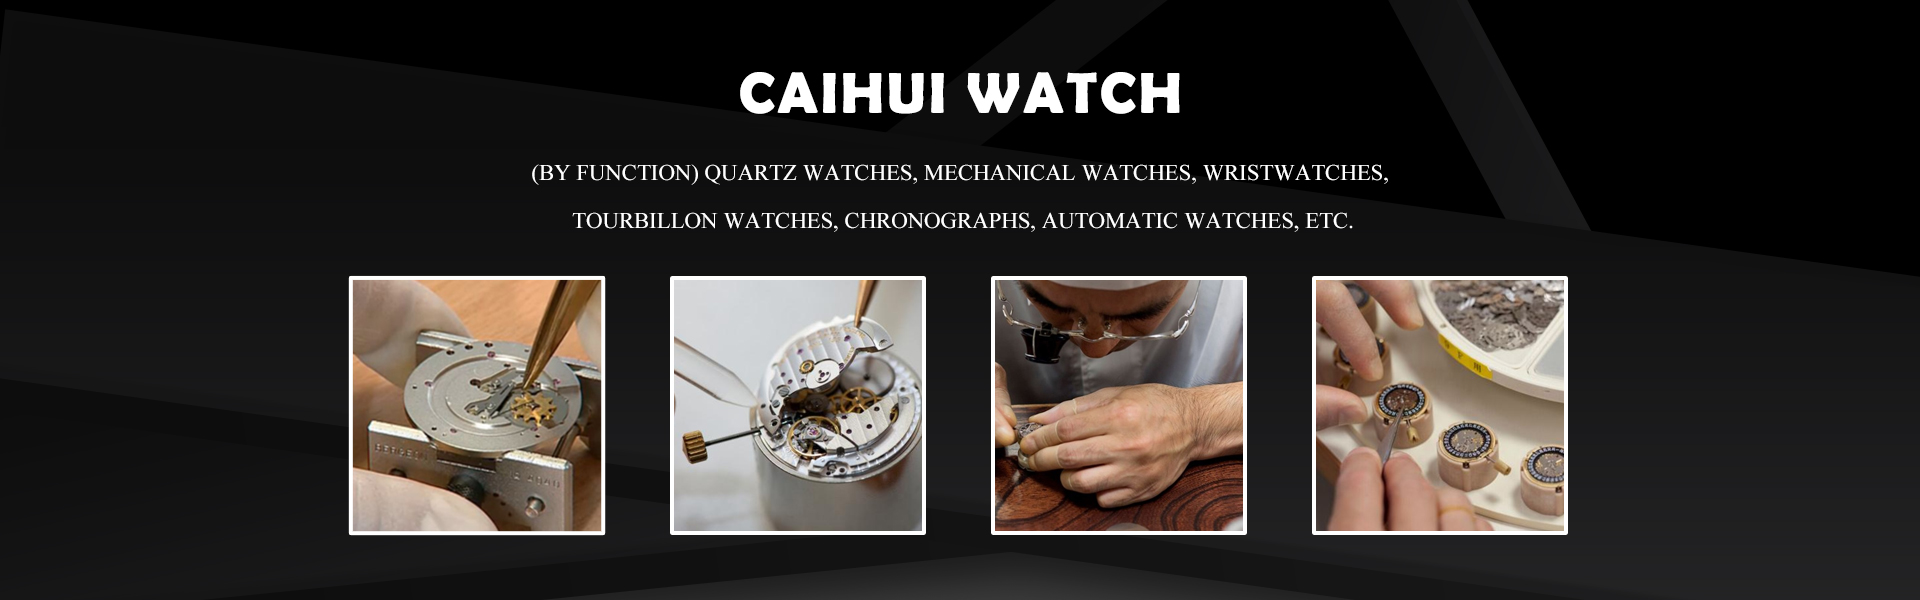 Hong Kong caihui watch co., LTD